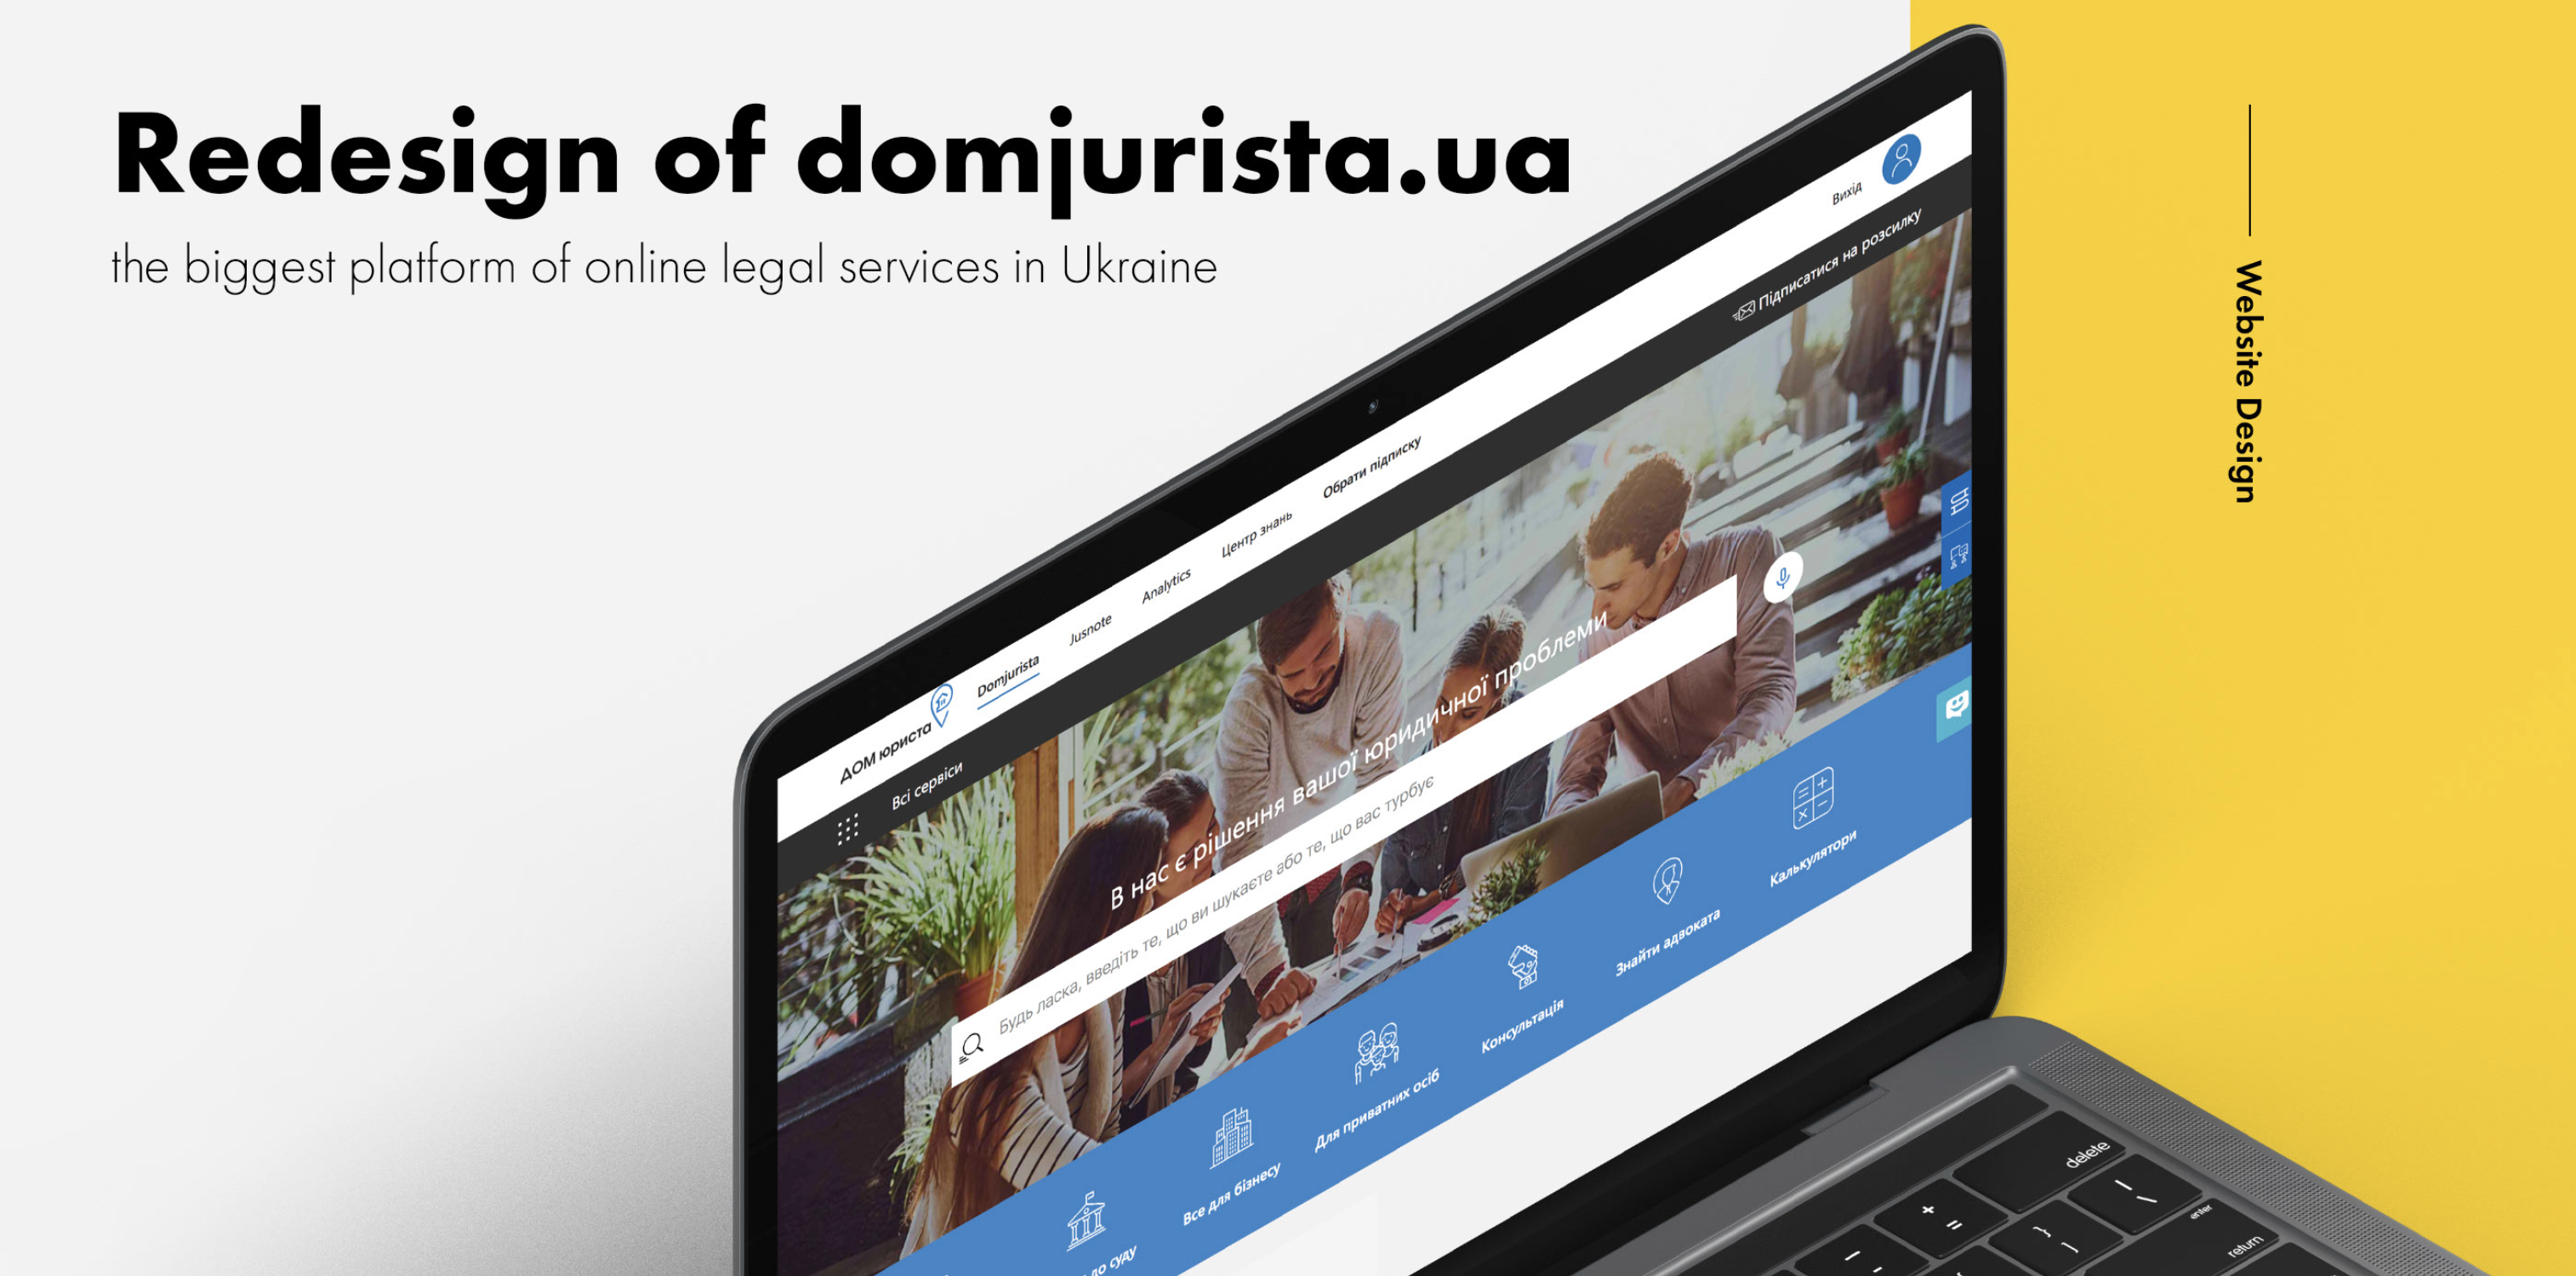 Redesign of Domjurista.ua - UX/UI